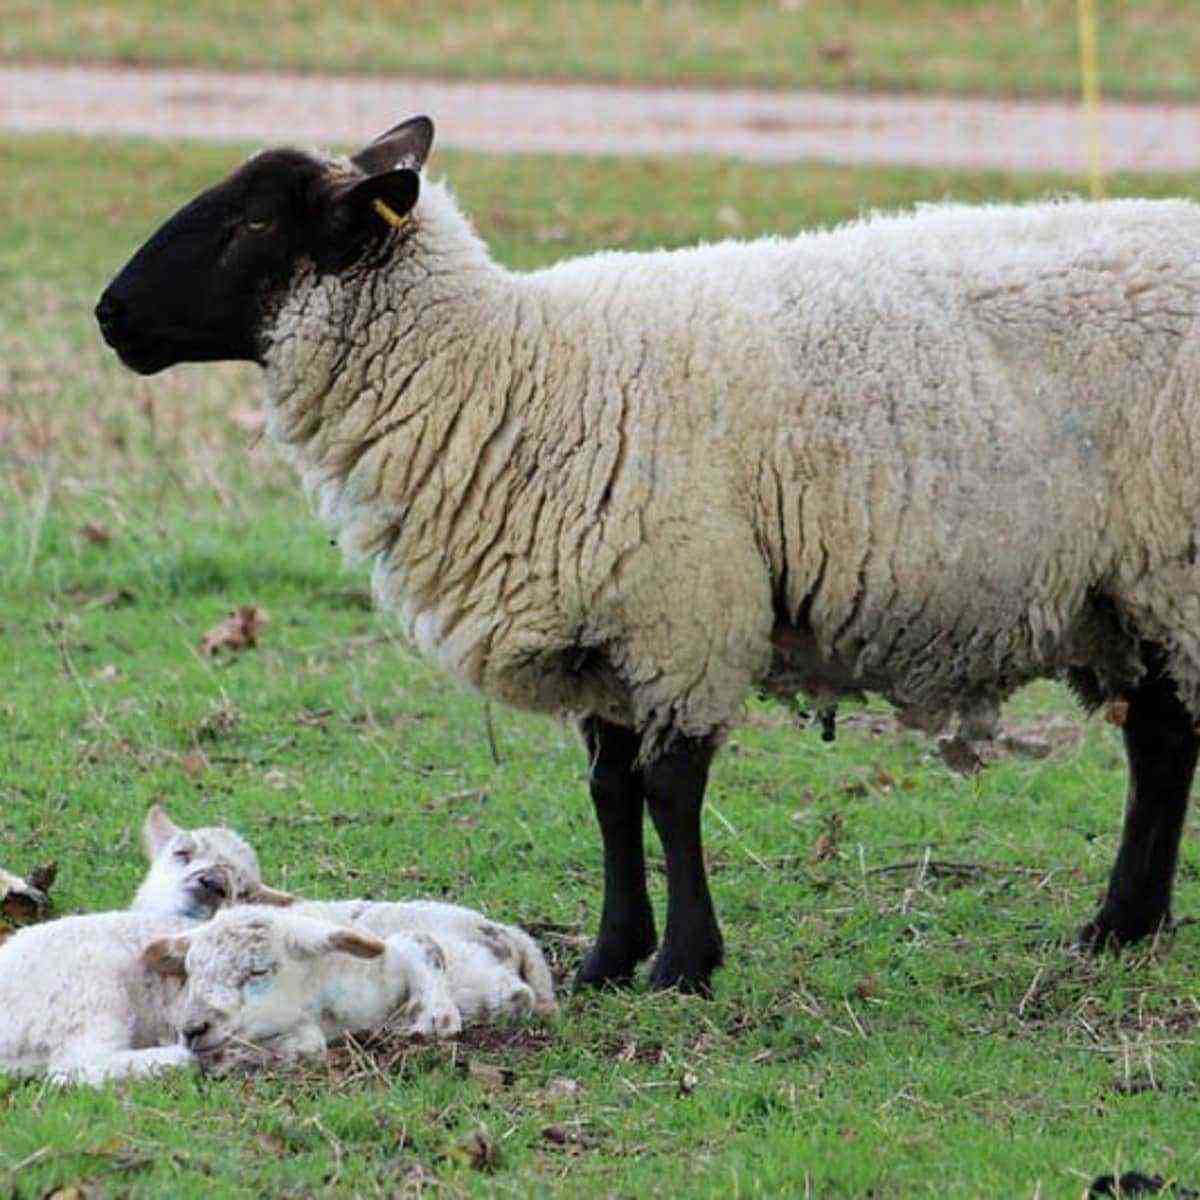 Texel meat breed sheep: description, origin, breeding